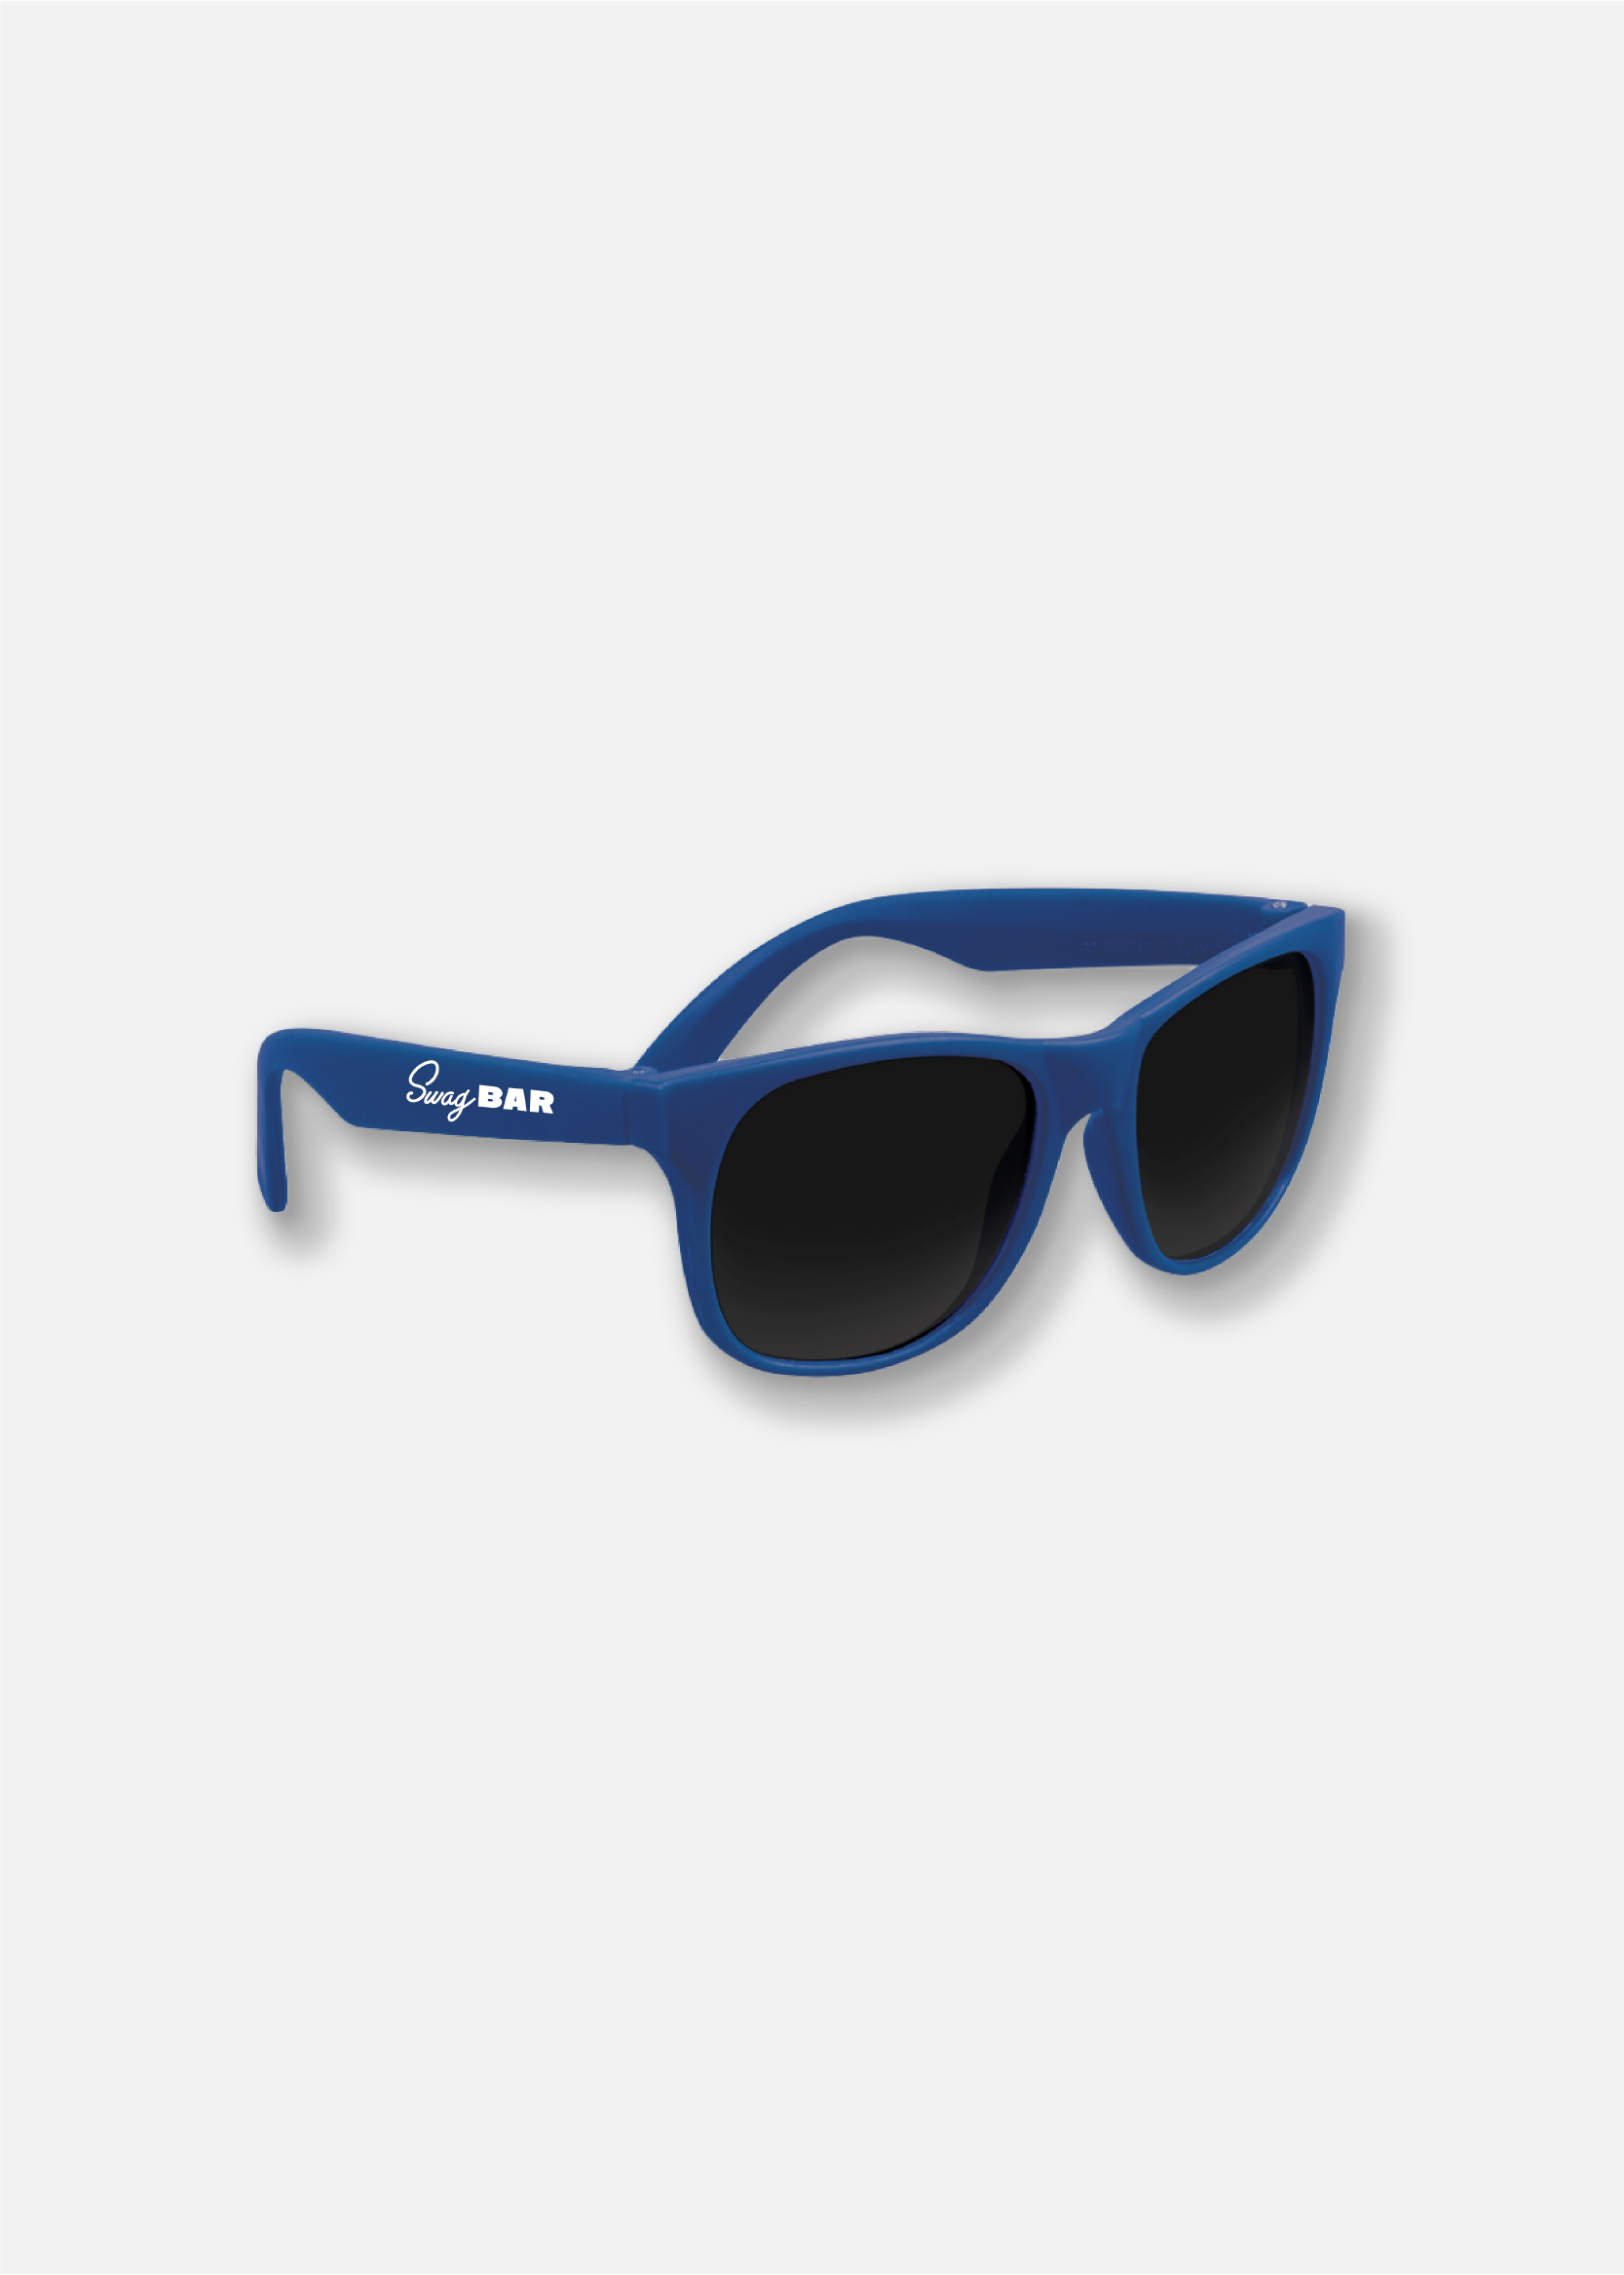 Bamboo Sunglasses - Promo Motive | Branded Merchandise Supplier